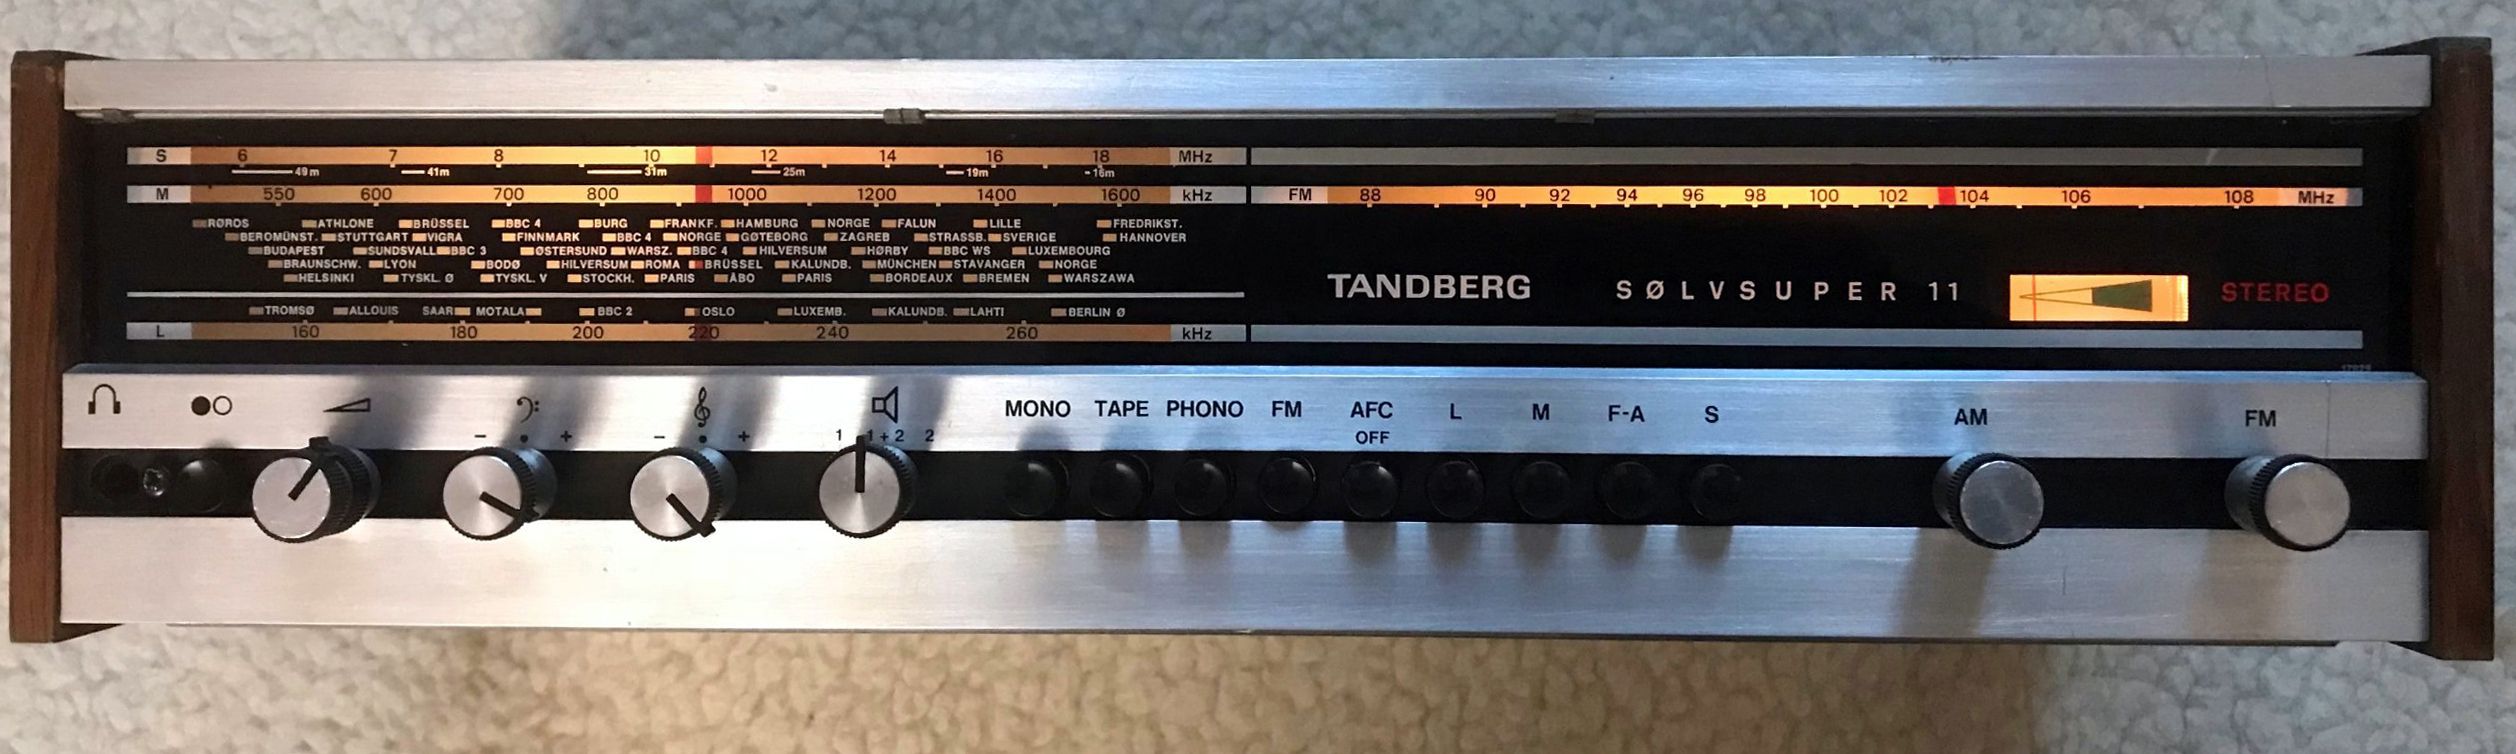 Tandberg SS-11-1.jpg